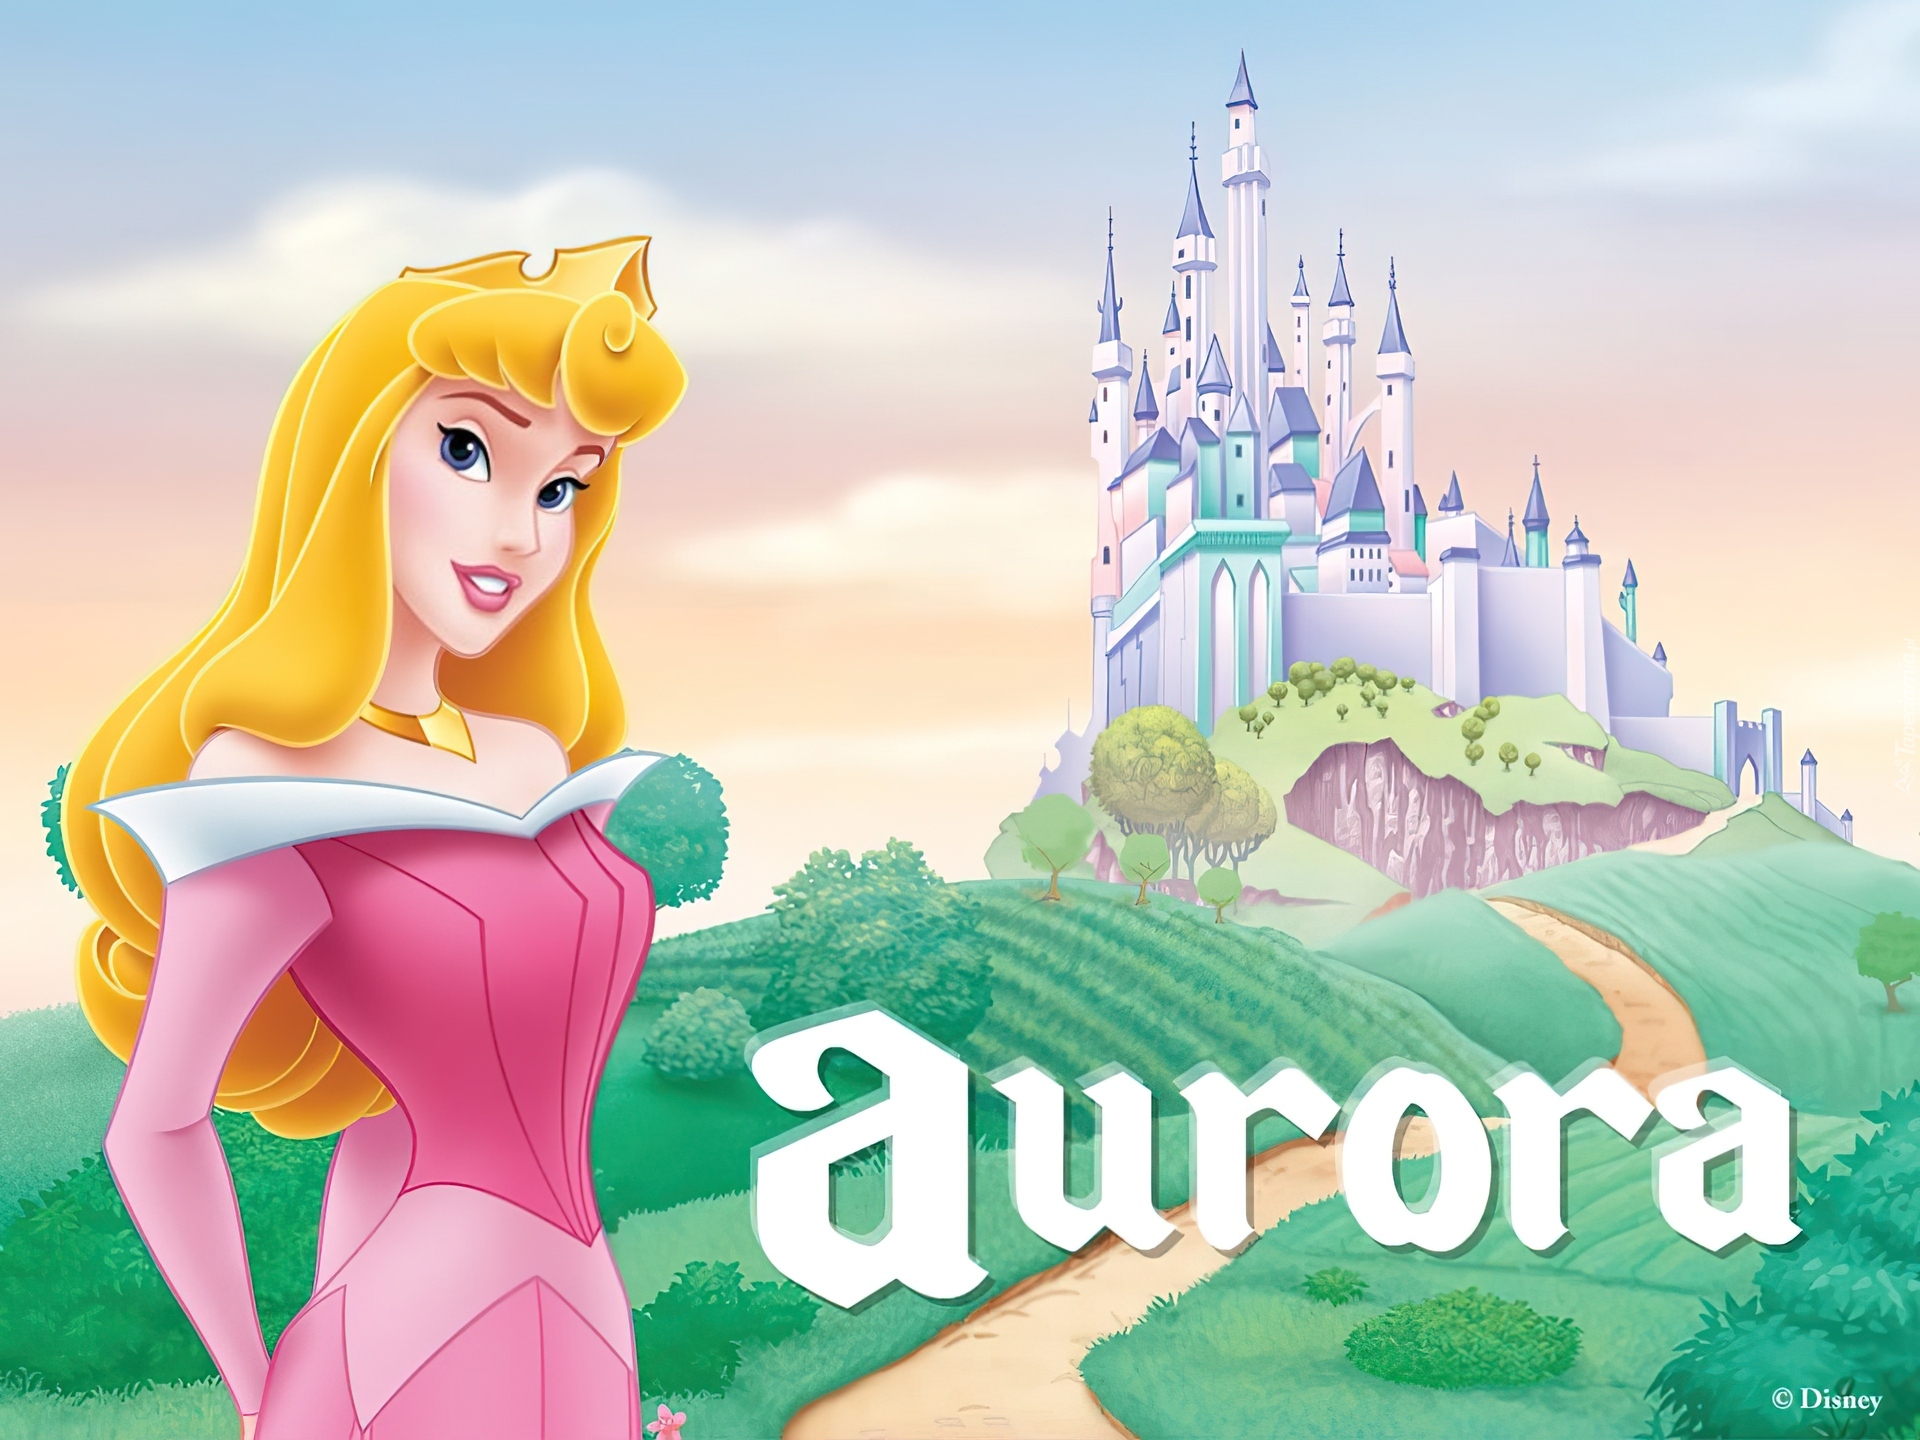 Śpiąca Królewna, Sleeping Beauty, Aurora